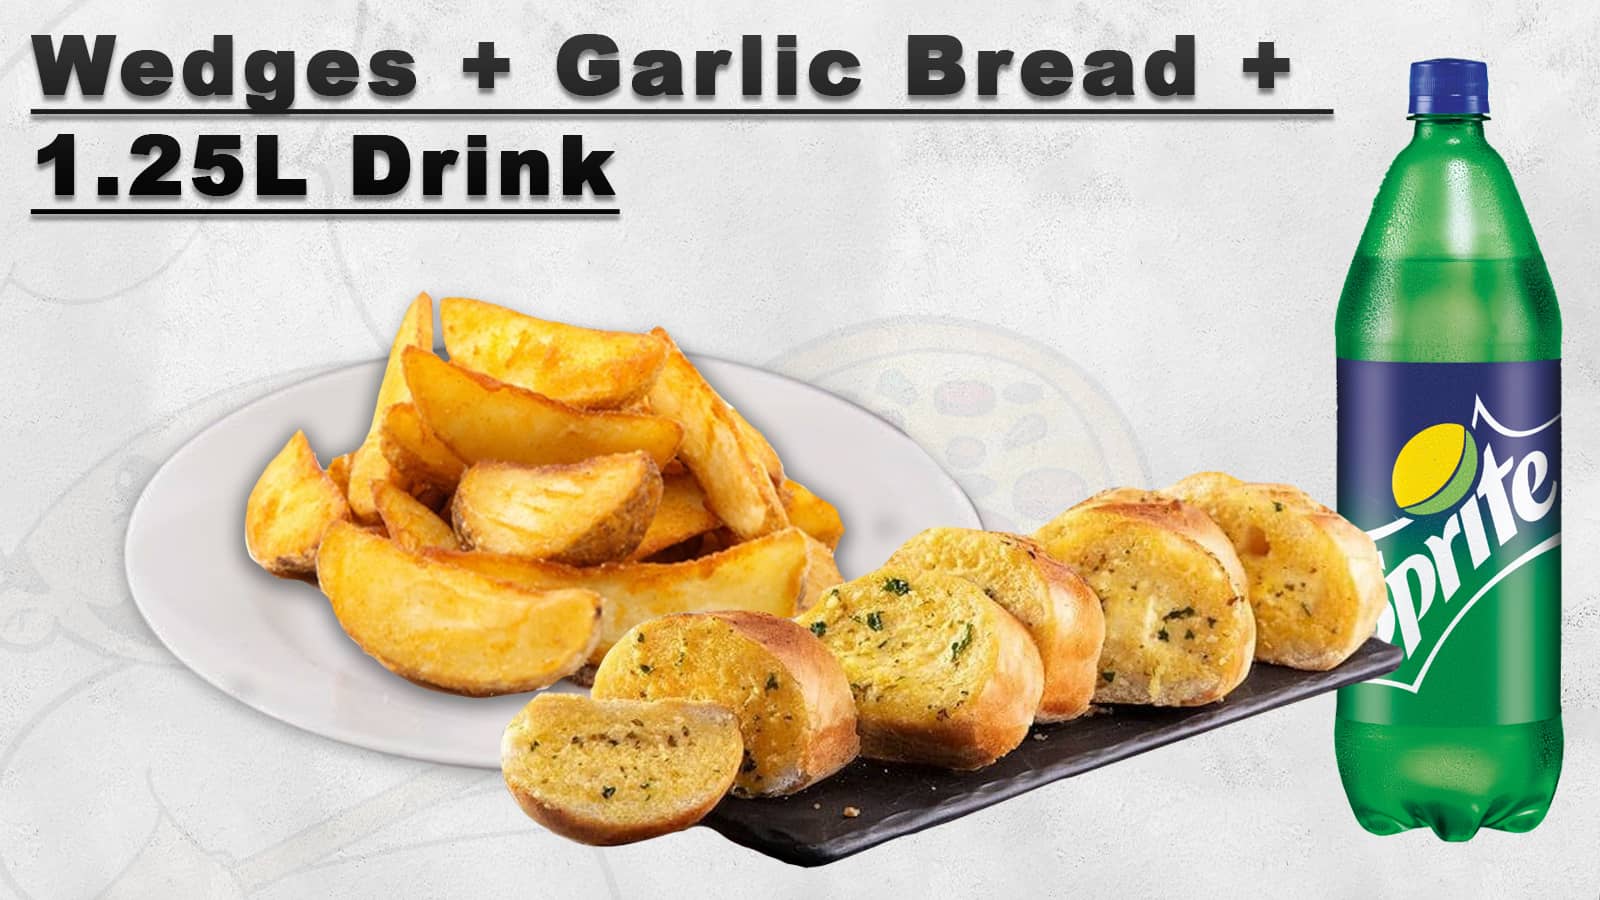 Wedges + Garlic Bread + 1.25 Drink